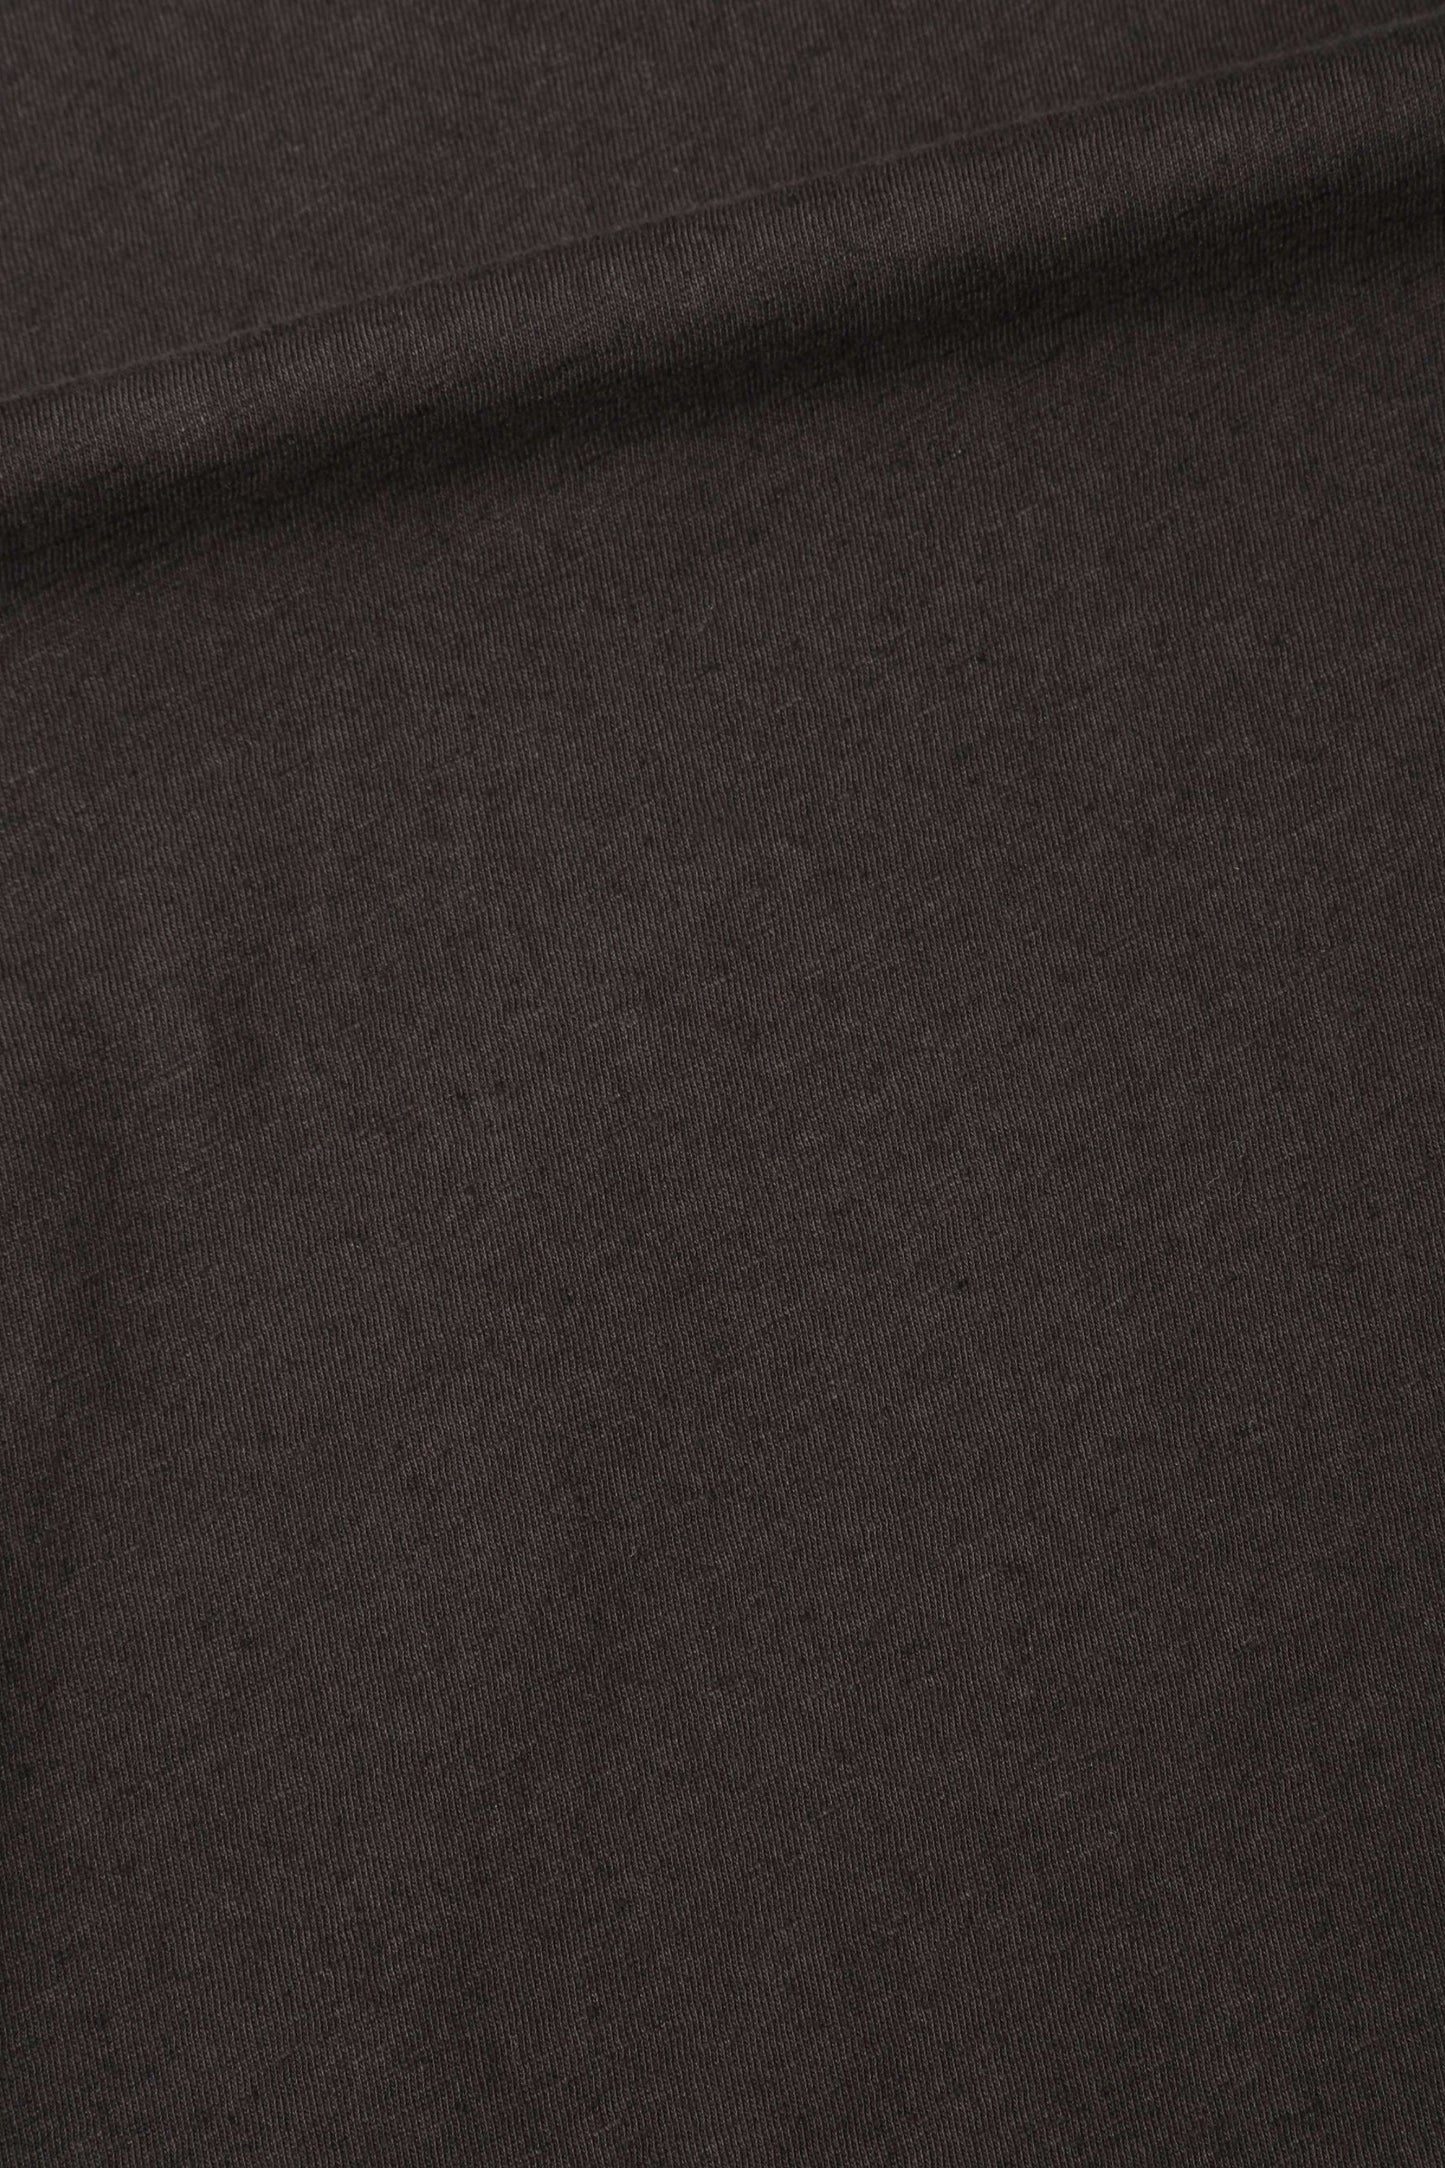 Margaret Howell - MHL. Simple T-Shirt Cotton Linen Jersey (Ebony)